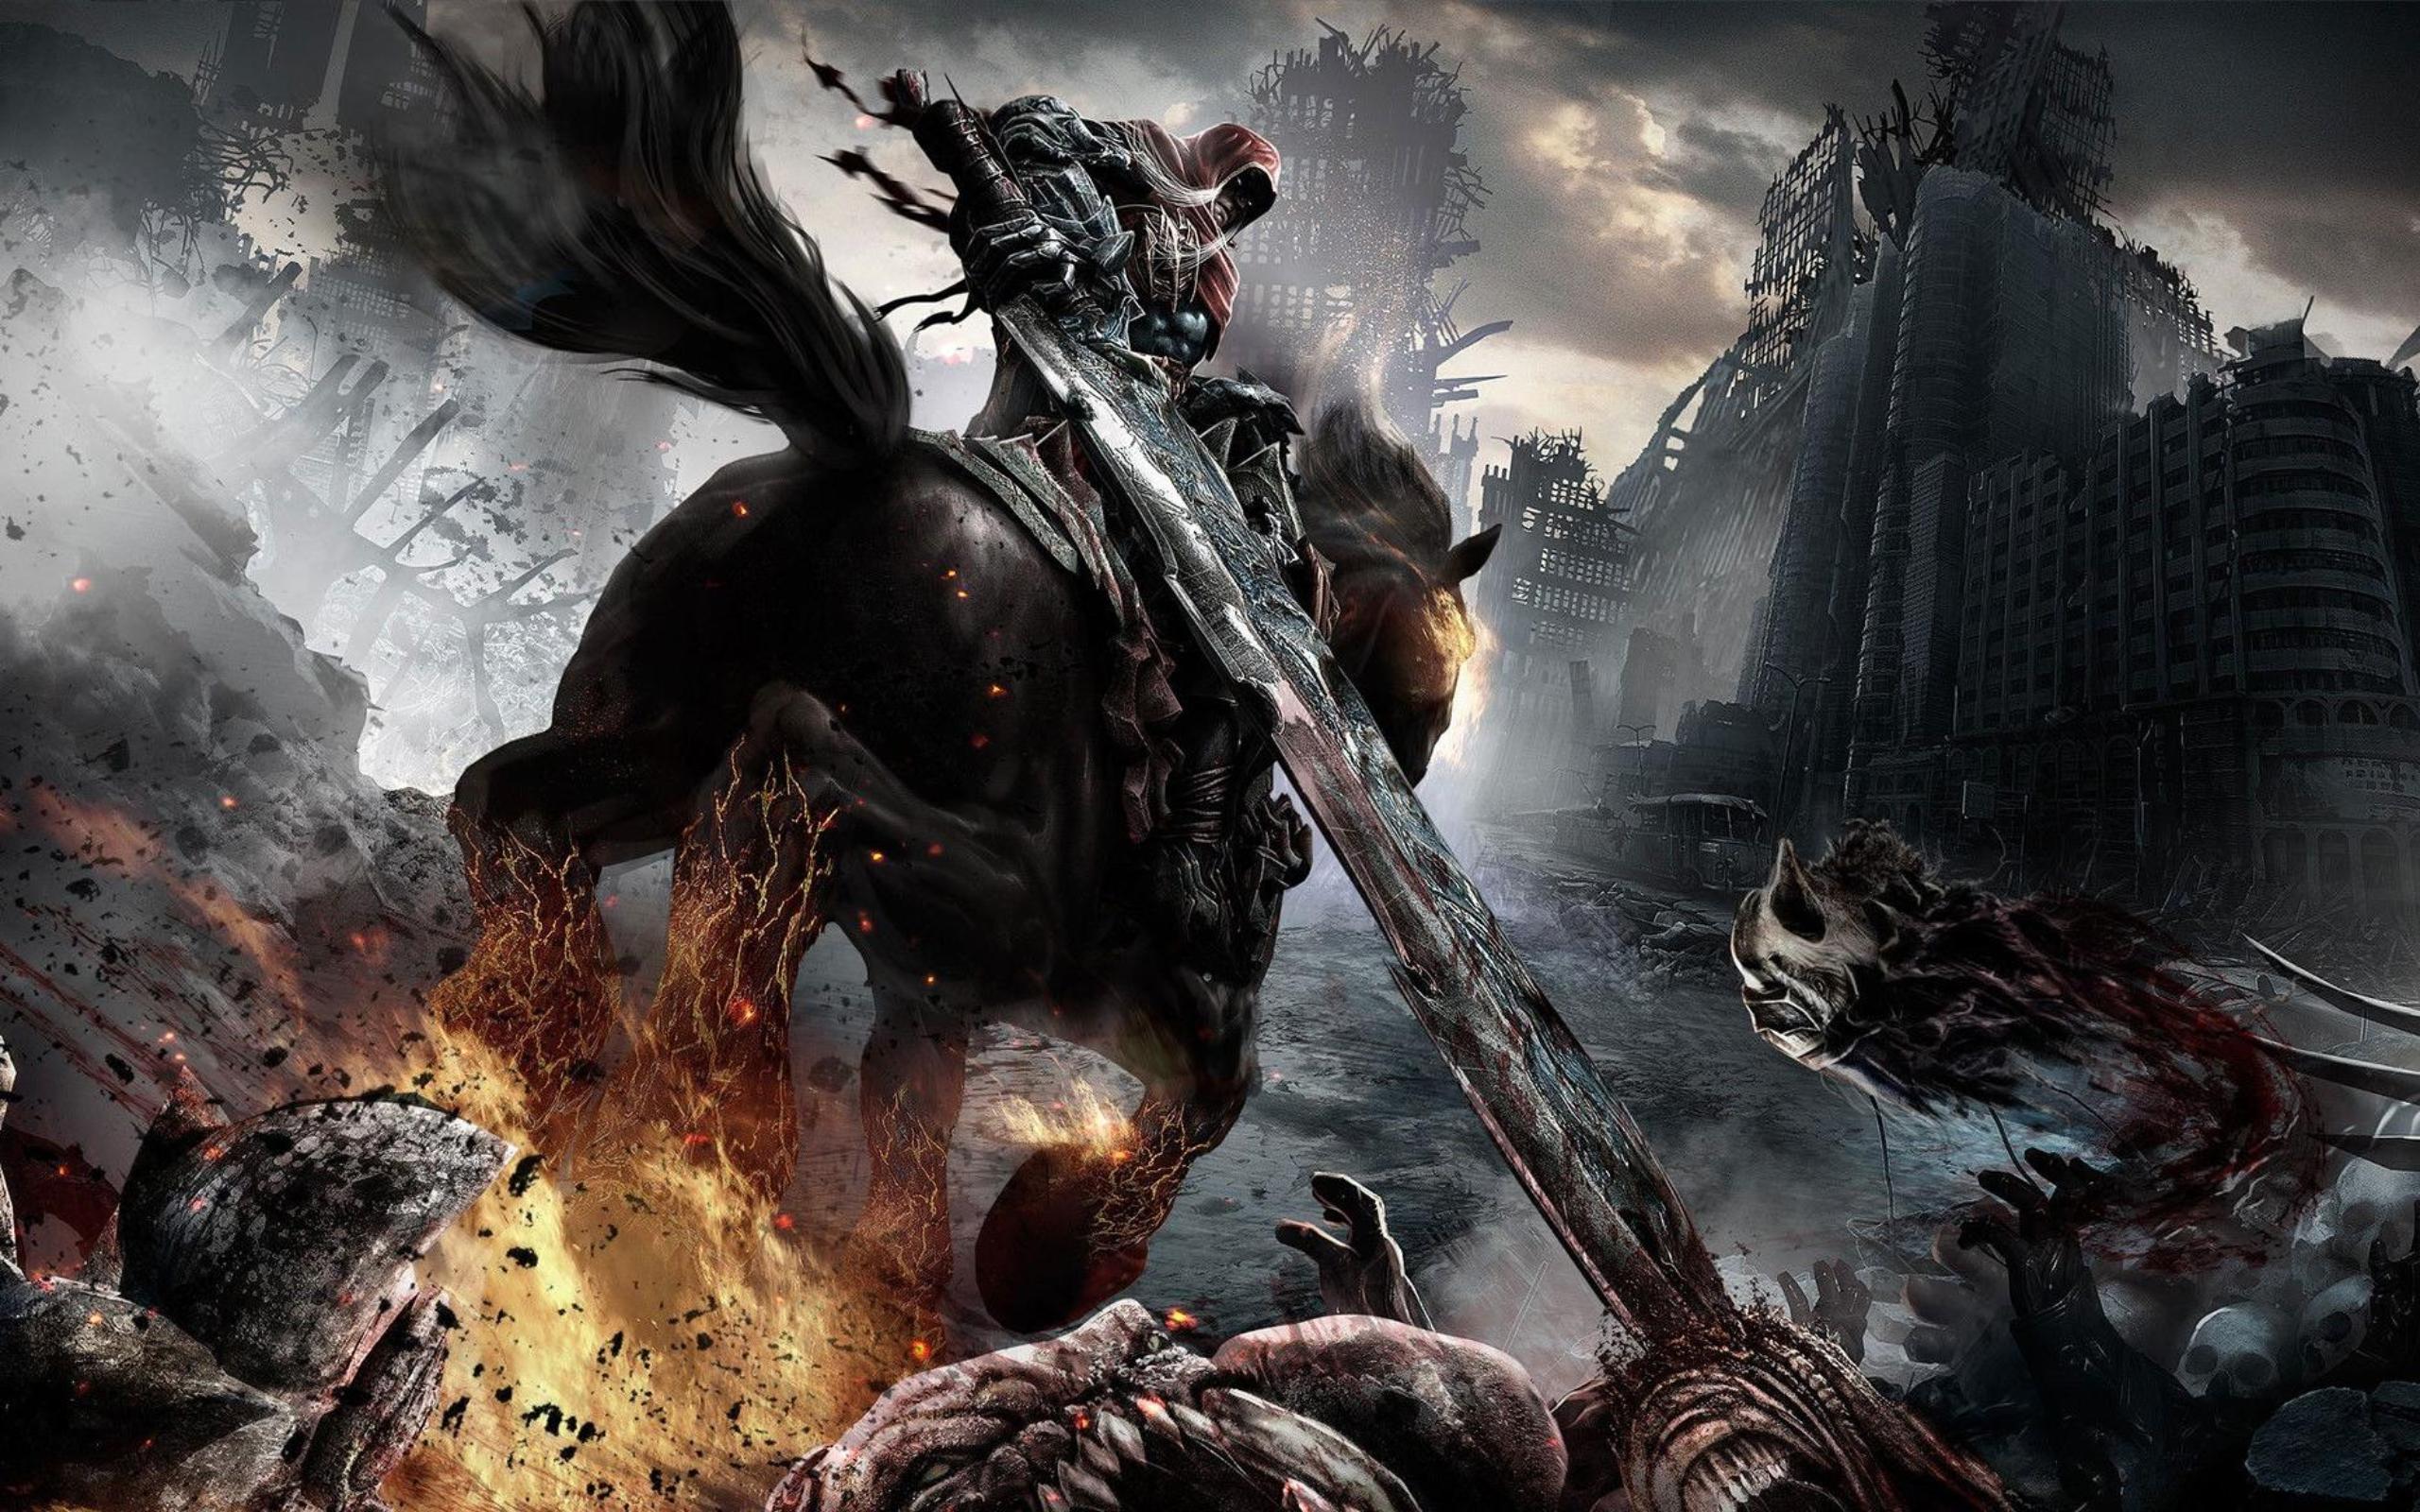 final fantasy 15 wallpaper,action adventure game,cg artwork,demon,pc game,strategy video game